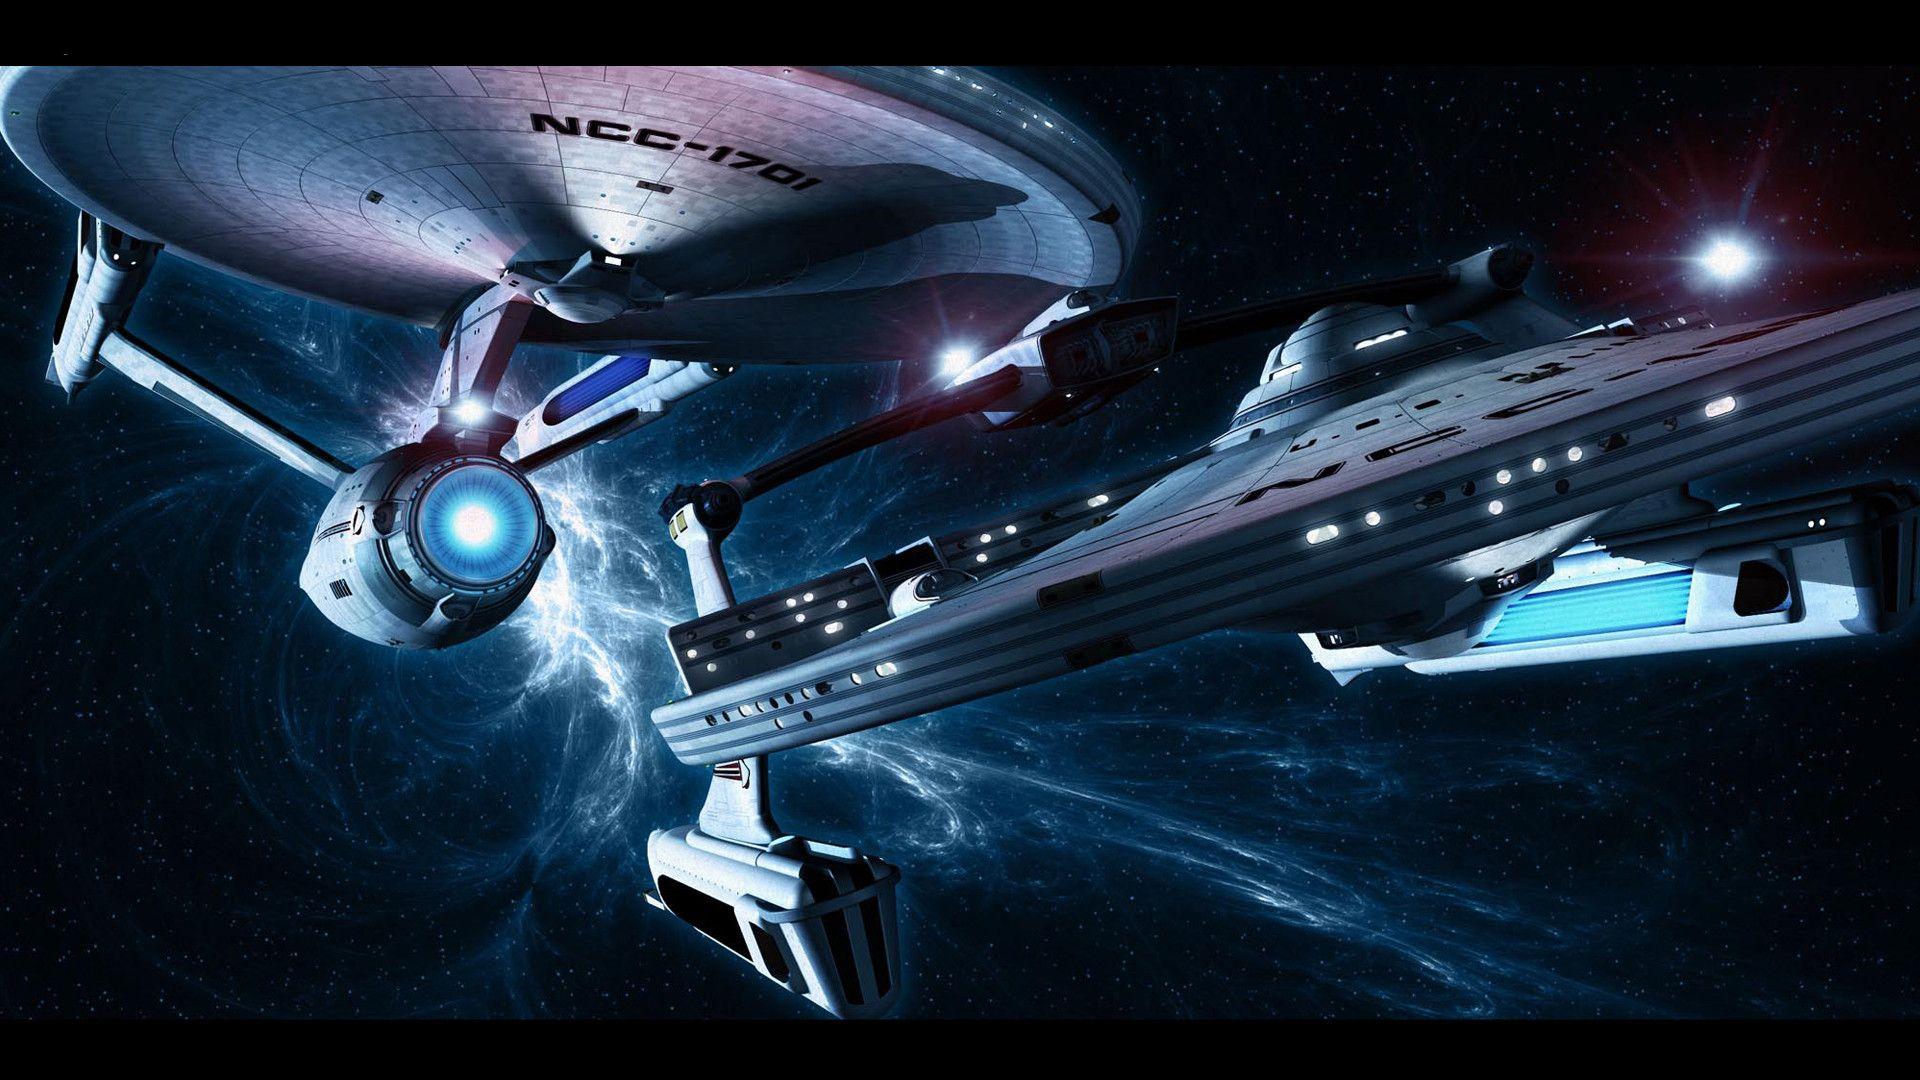 Fondos de pantalla de Star Trek. Wallpaper de Star Trek. Fondos